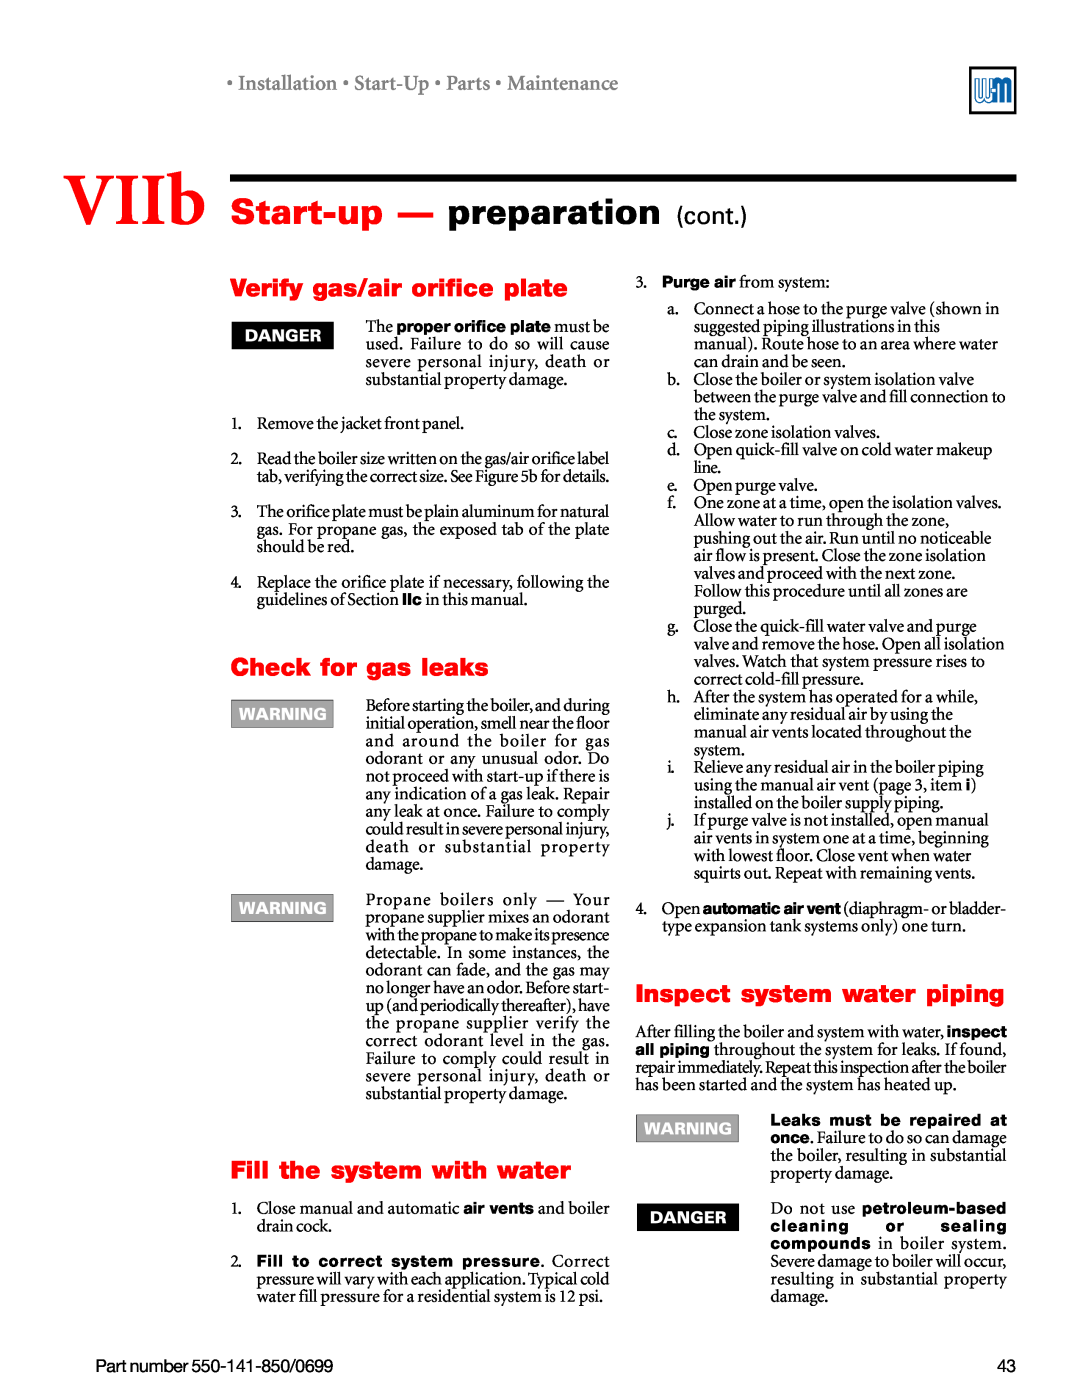 Weil-McLain 550-141-850/0599 manual VIIb Start-up— preparation cont, Verify gas/air orifice plate, Check for gas leaks 